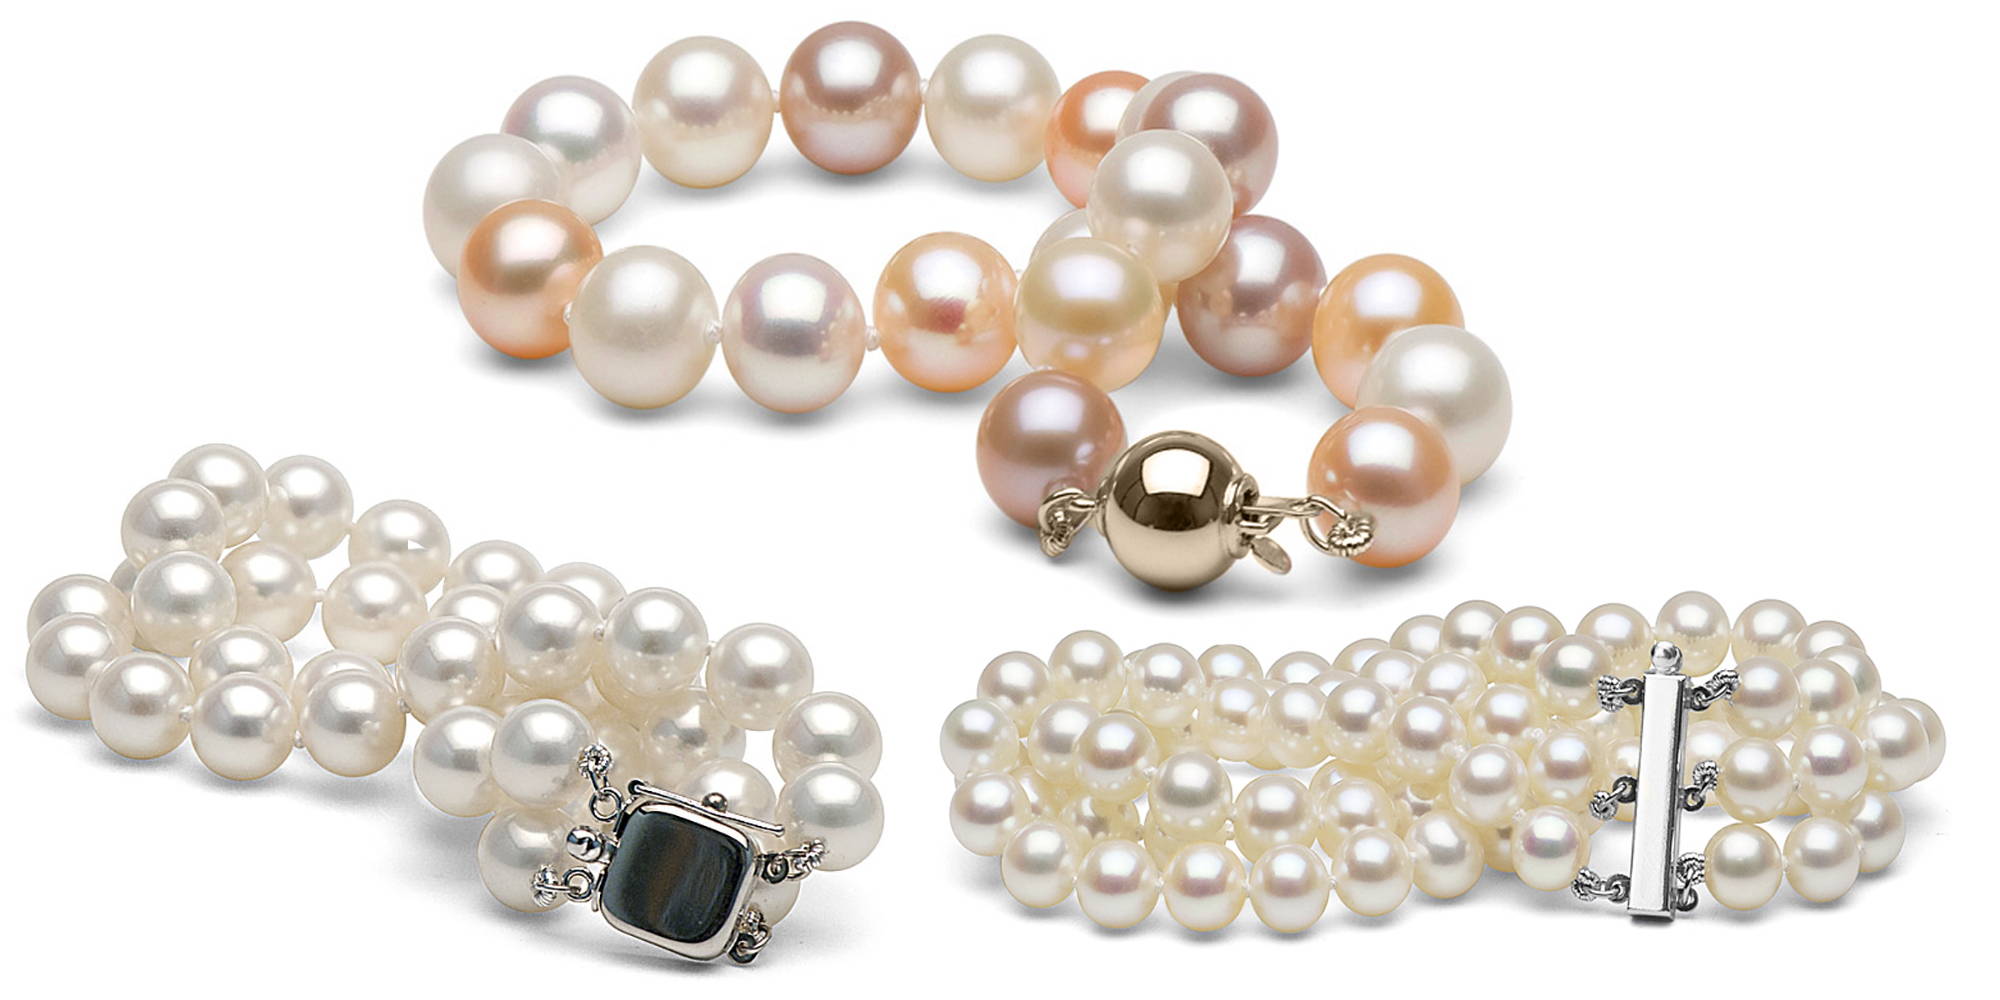 Freshwater Pearl Jewelry Shopping Guide: Pearl Bracelets